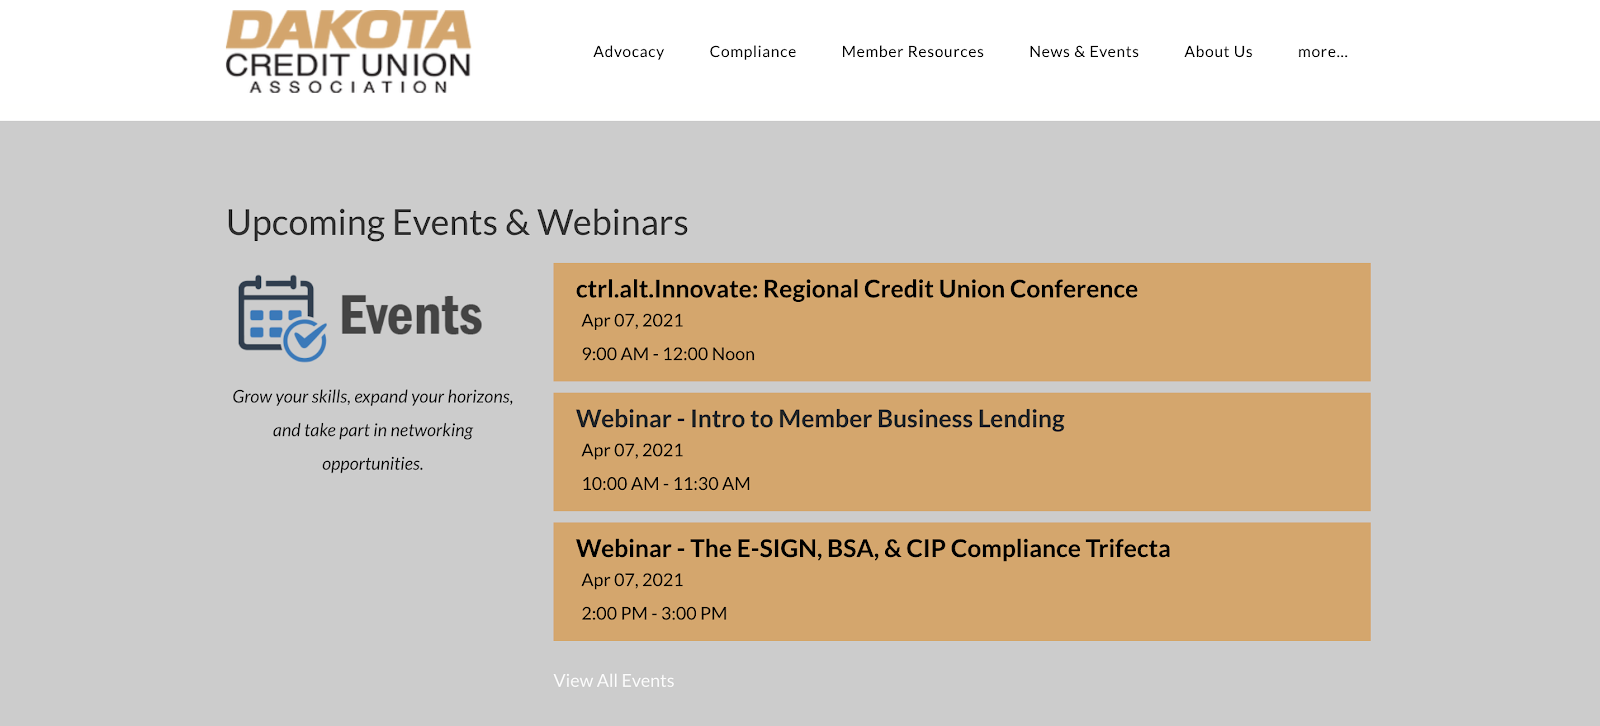 Dakota Credit Union Association